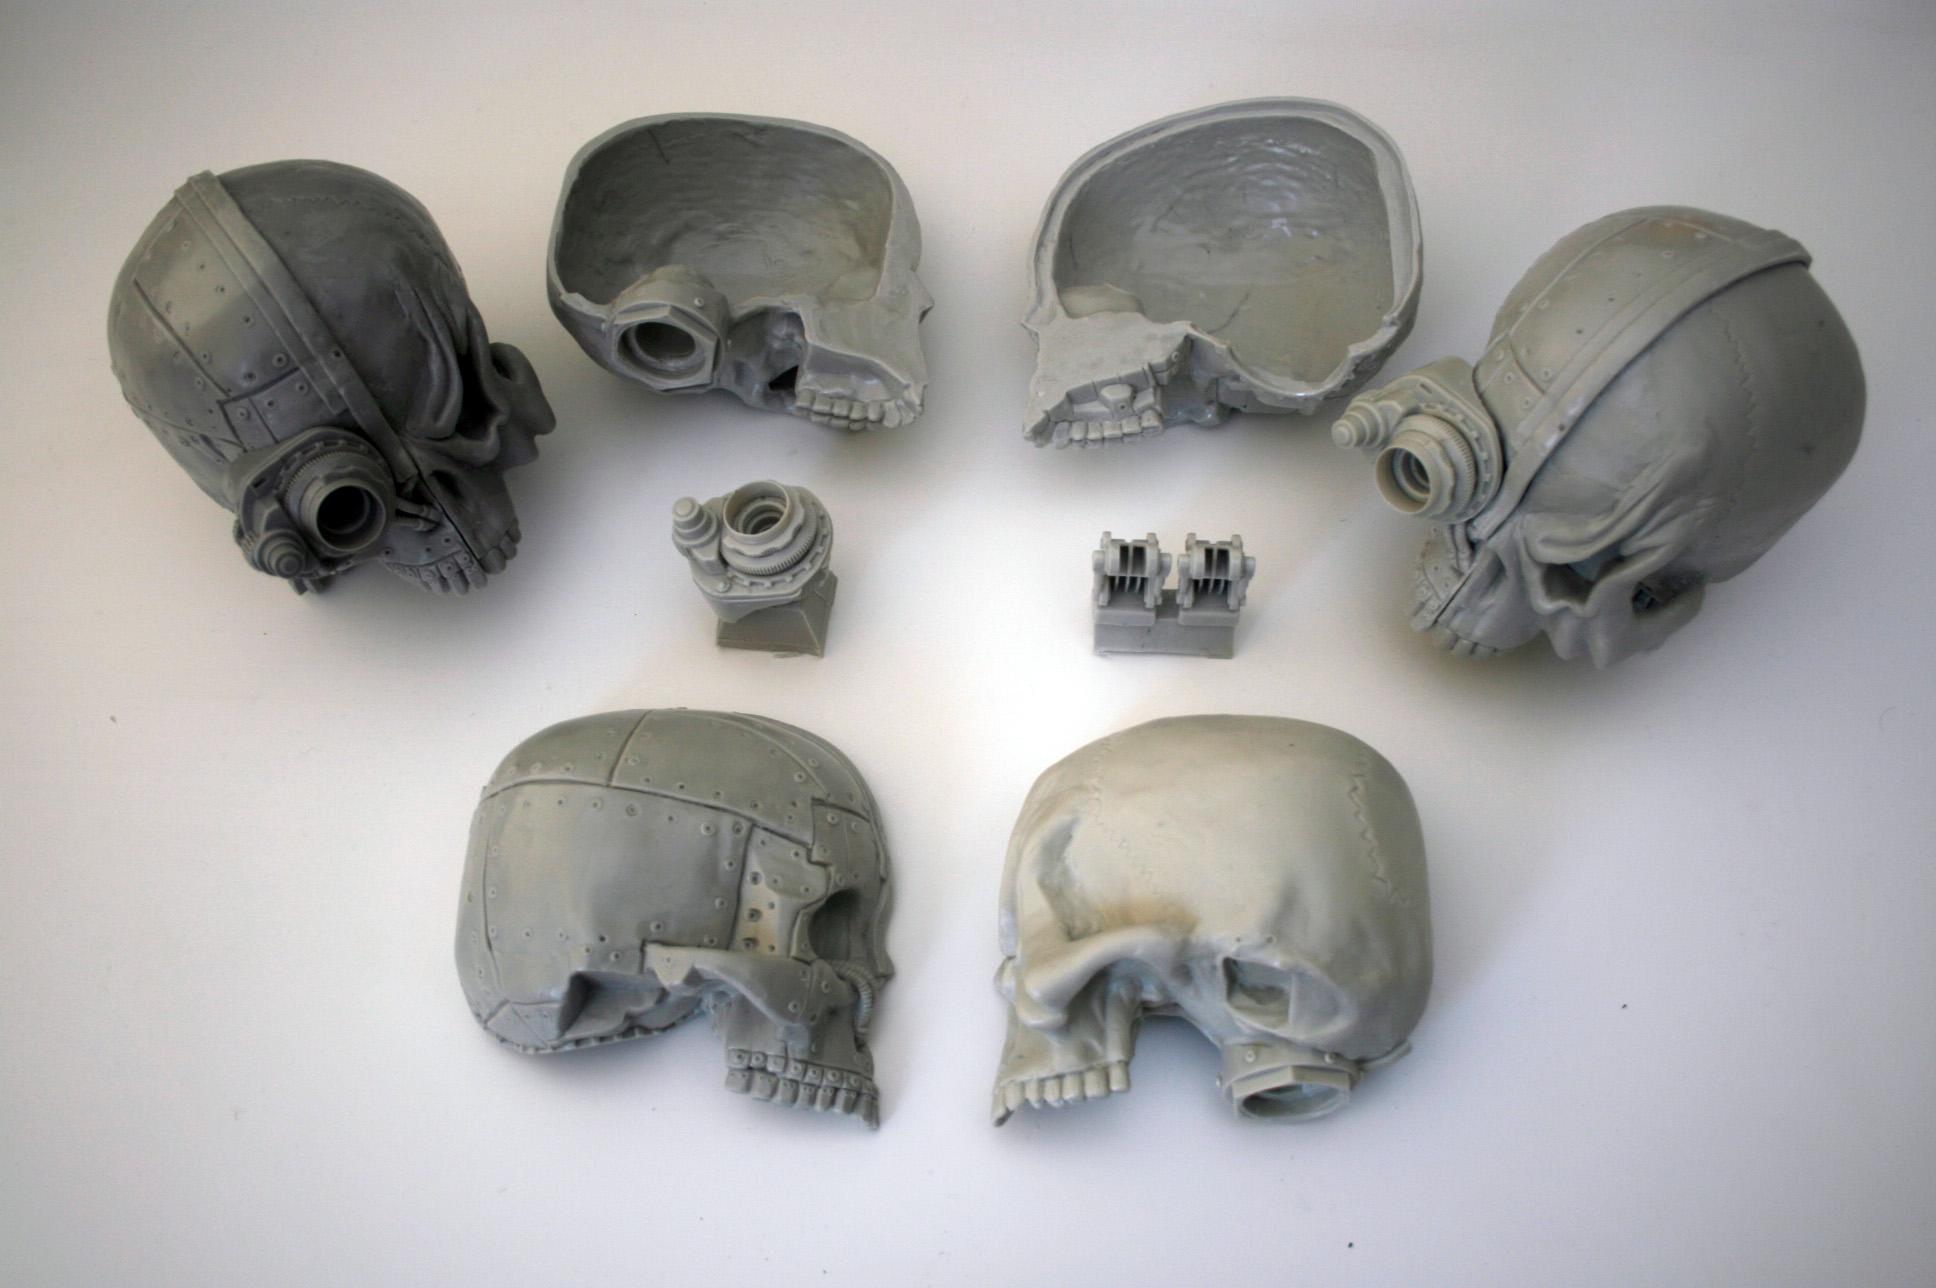 Companion skulls